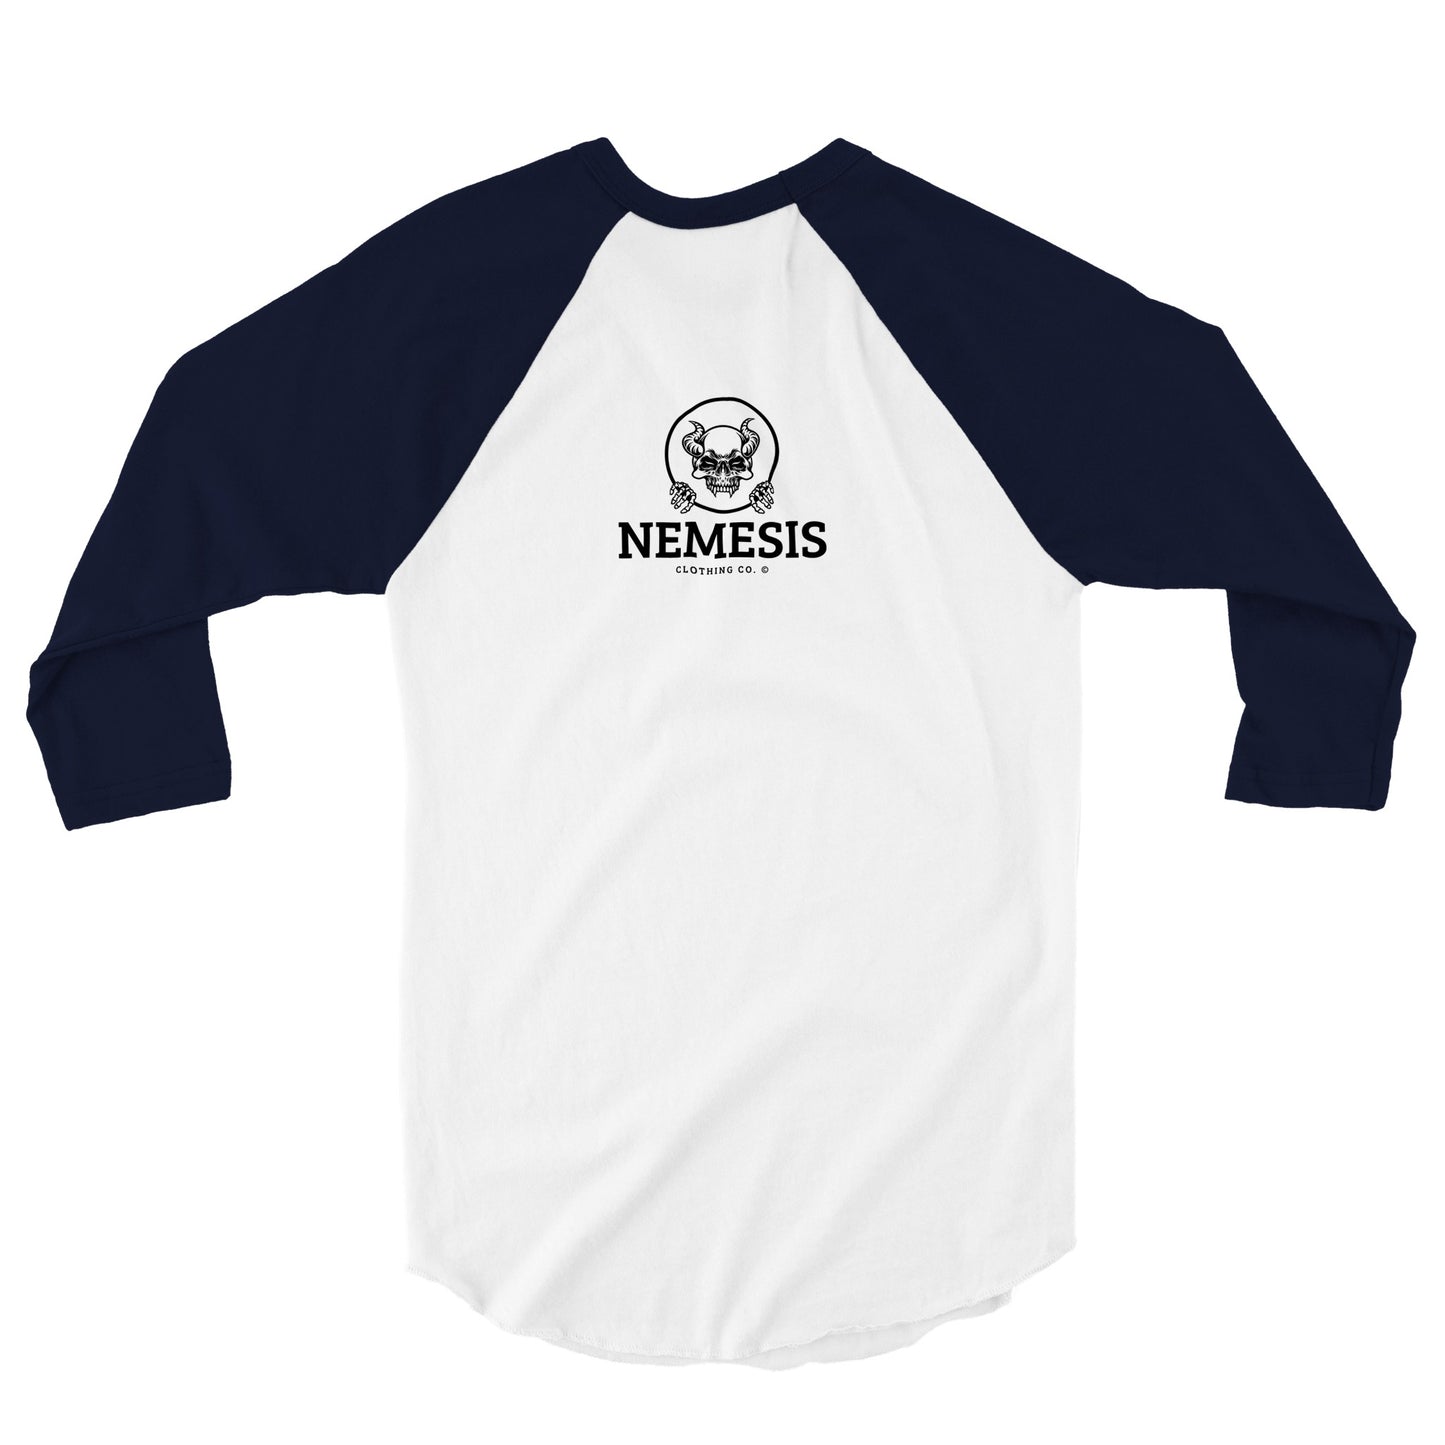 The "I AM..." Unisex 3/4 sleeve Raglan T-shirt